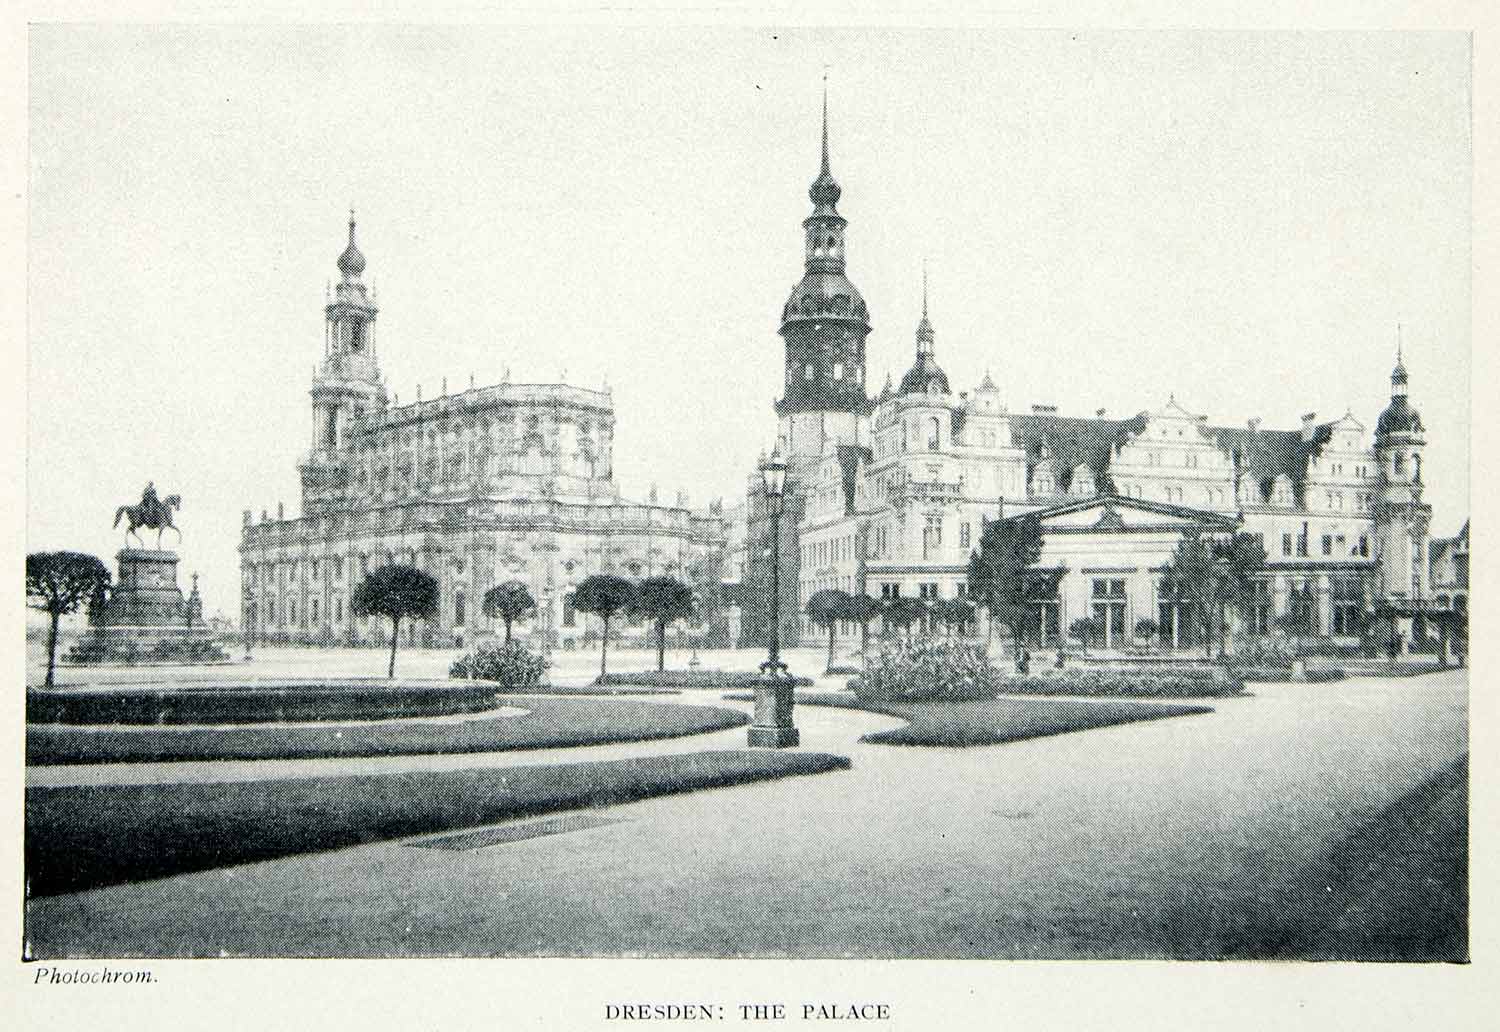 1925 Print Dresden Castle Schloss Germany Baroque Neo-Renaissance XGAG2